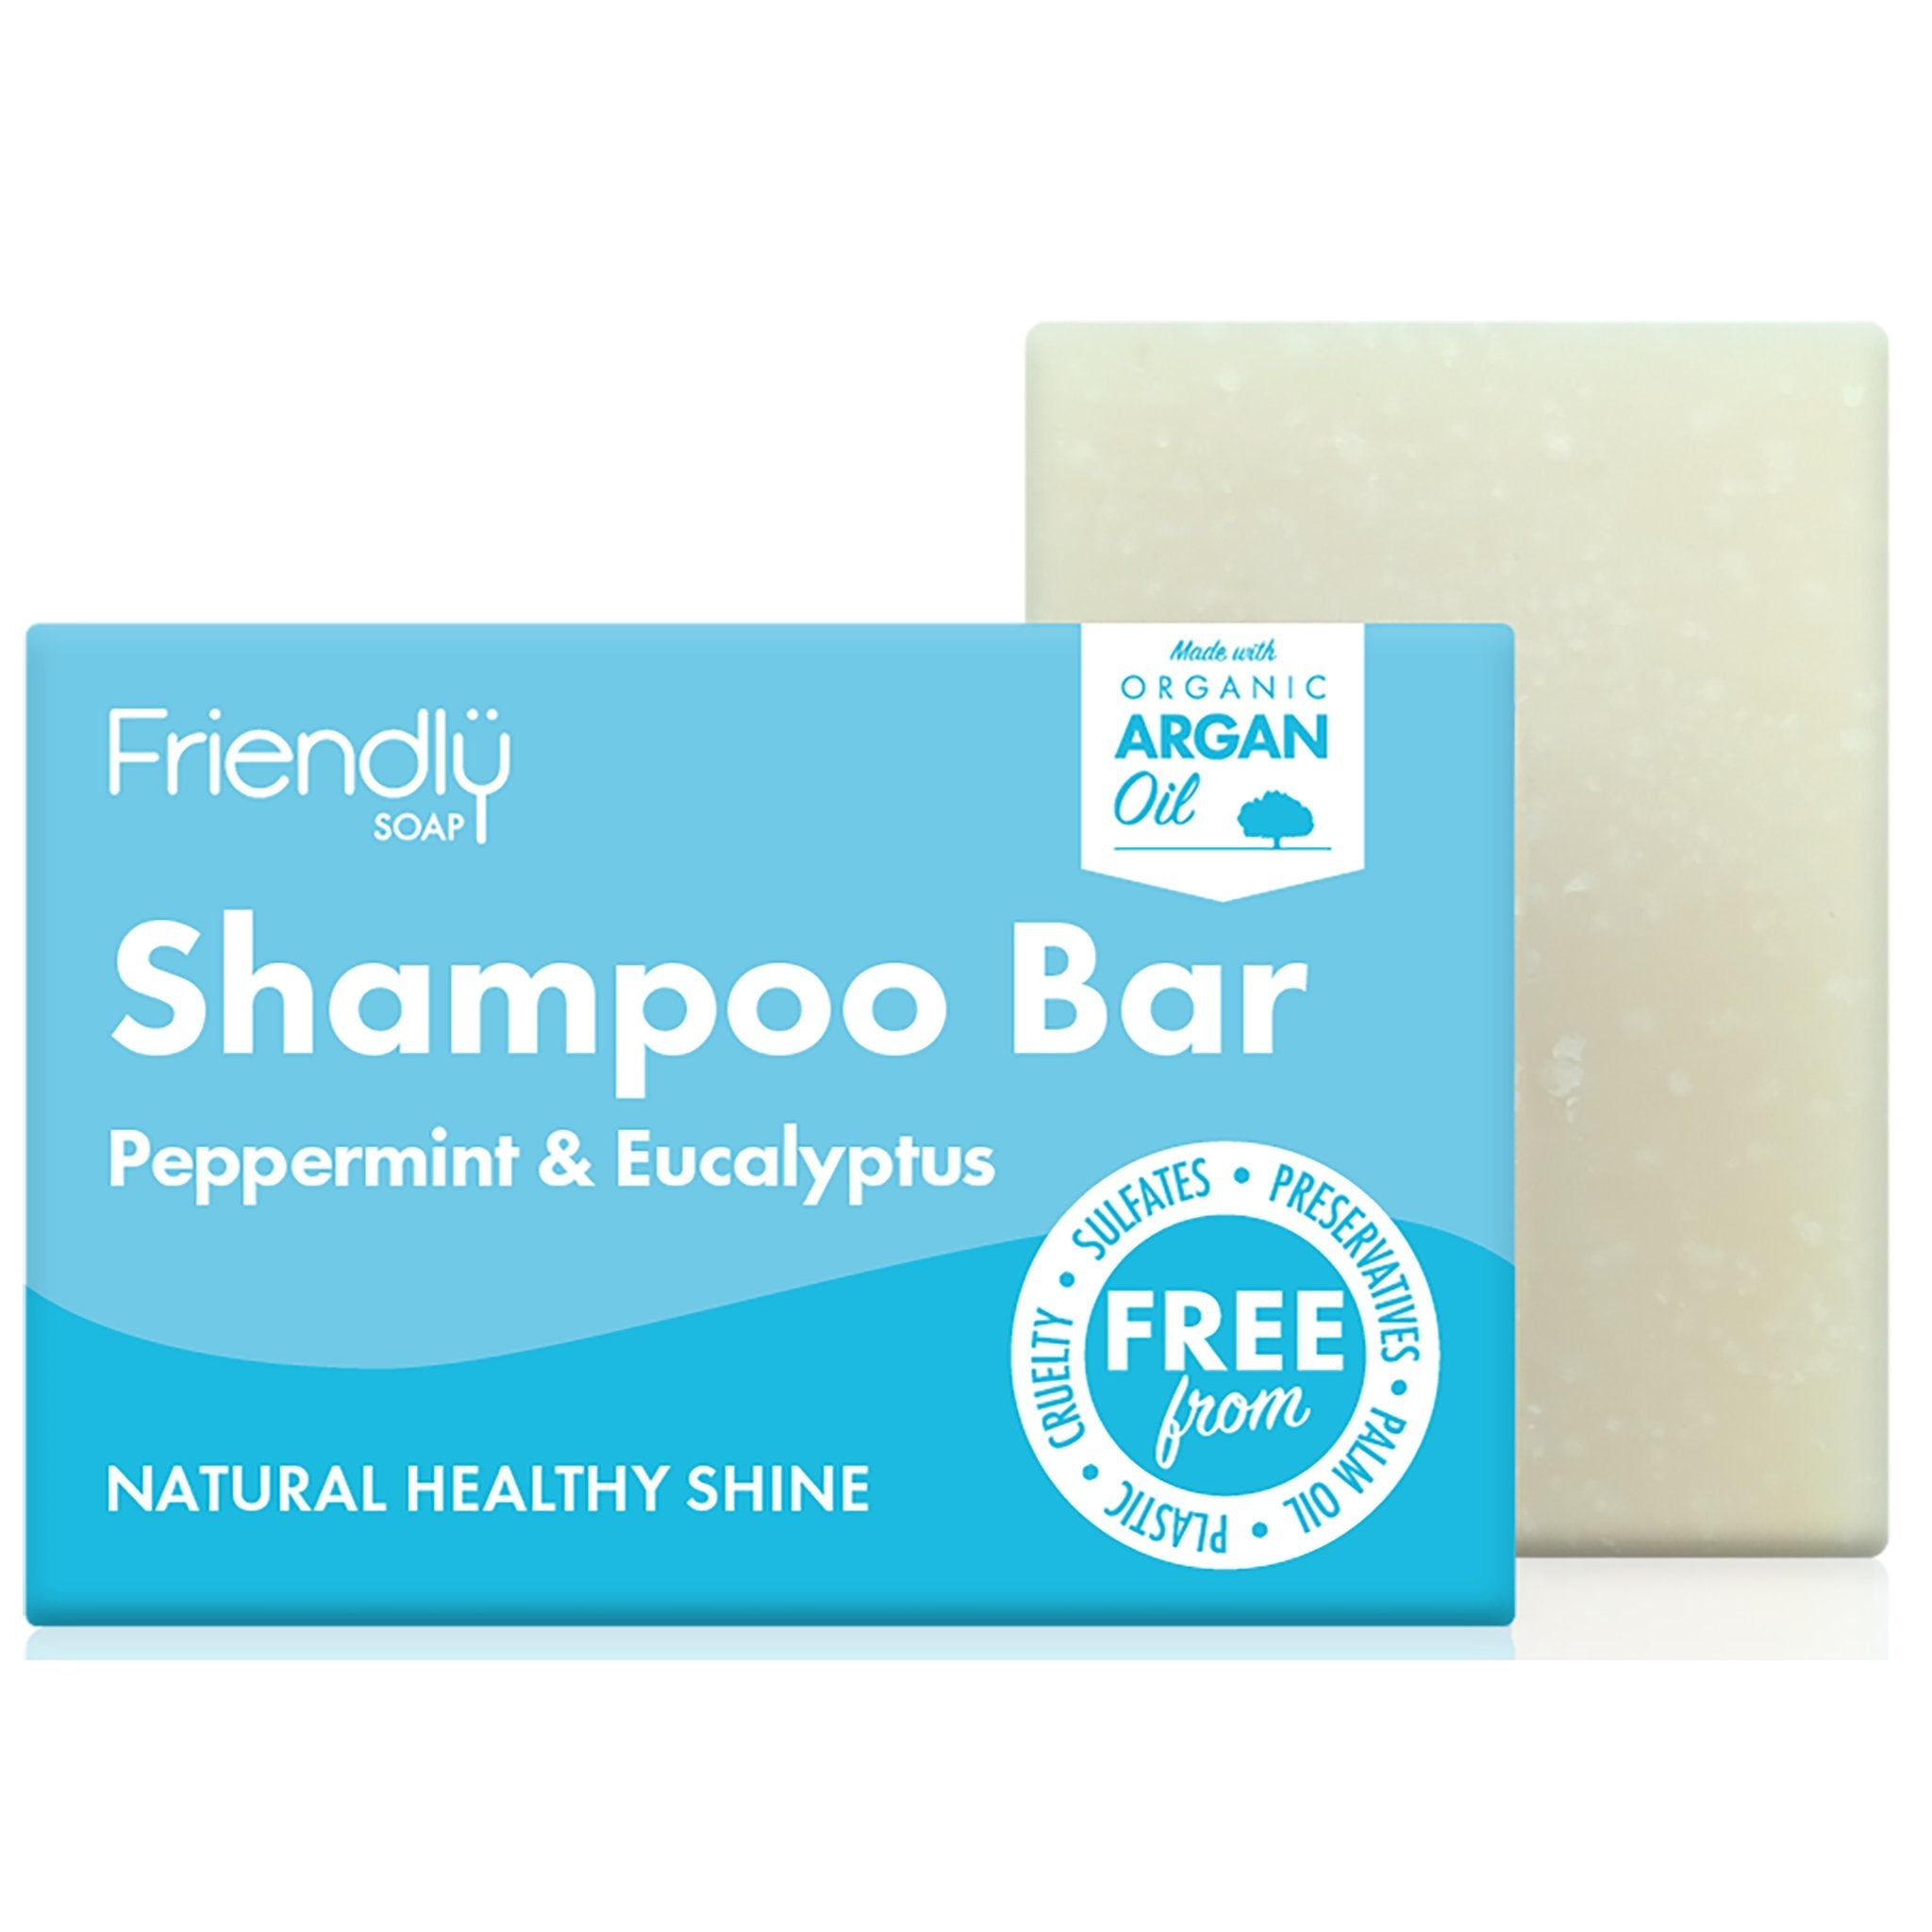 Healthy Shine Shampoo Bar - Peppermint & Eucalyptus - mypure.co.uk